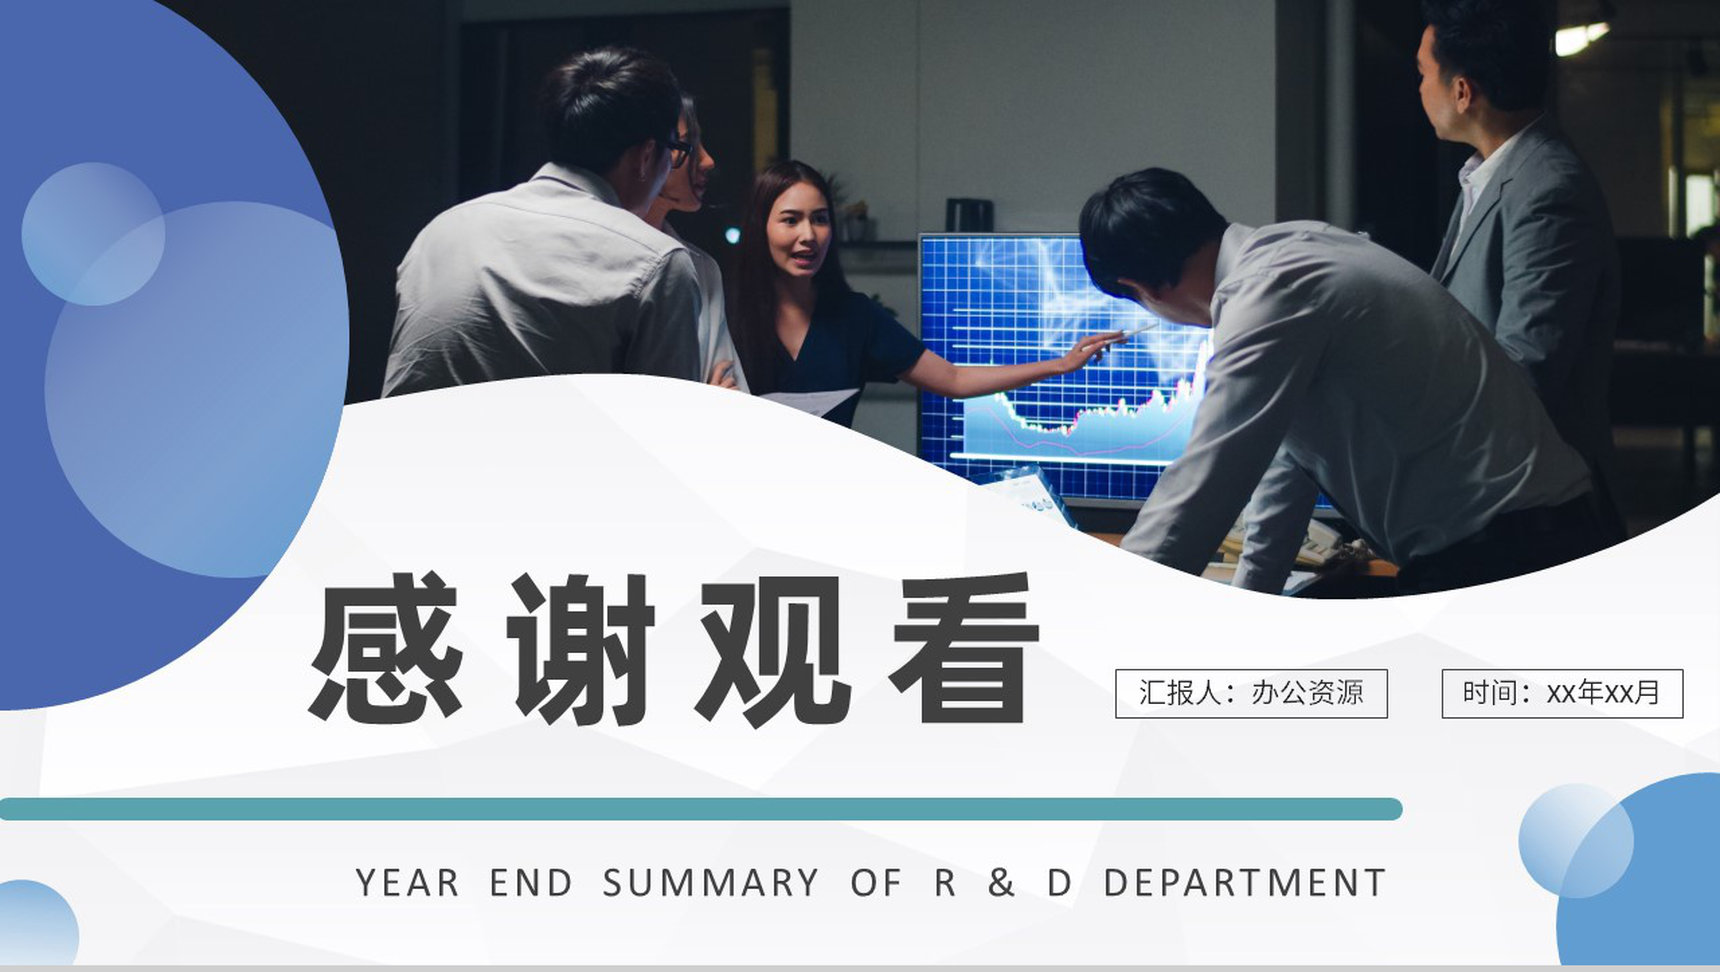 20XX福田工商服务中心工作总结暨新年计划PPT模板-11